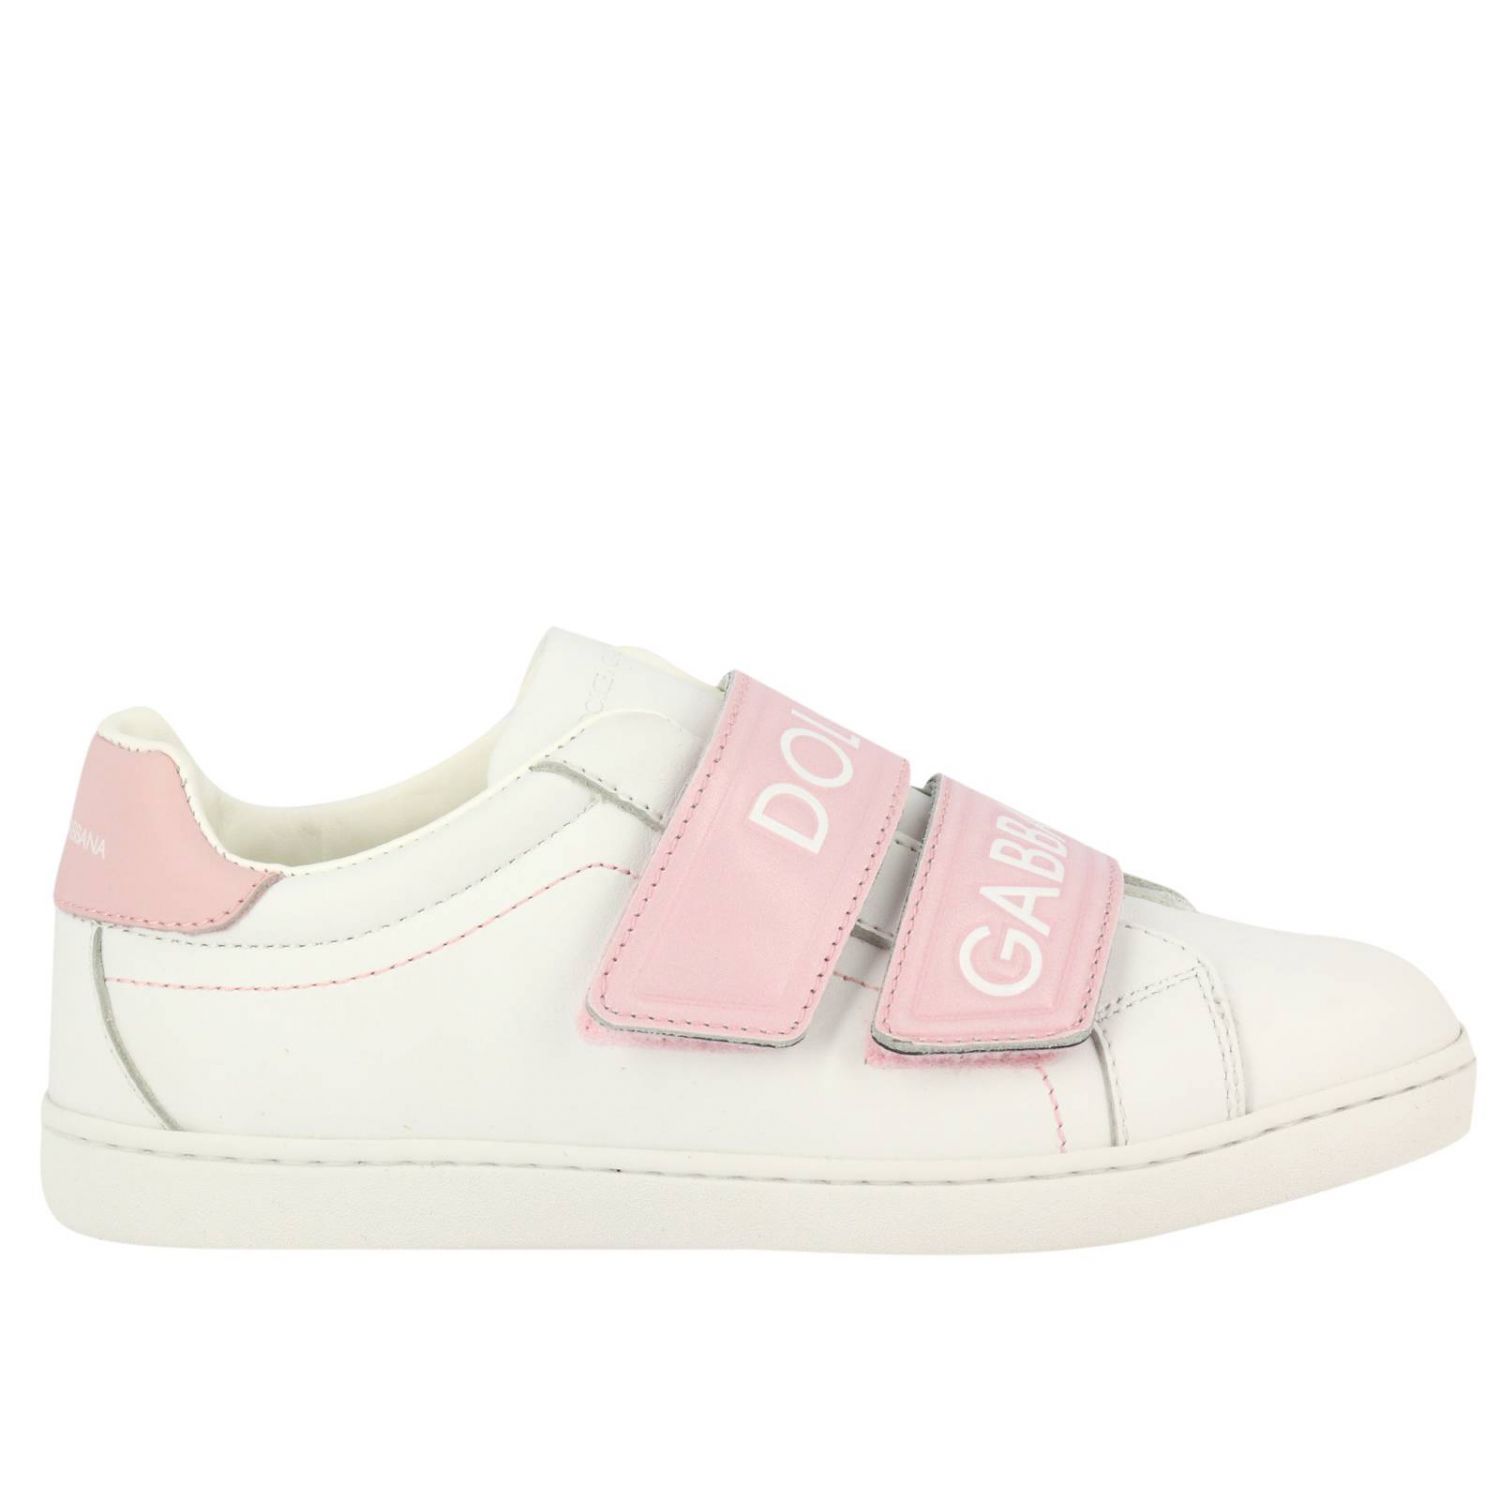 DOLCE & GABBANA: Shoes kids | Shoes Dolce & Gabbana Kids White | Shoes ...